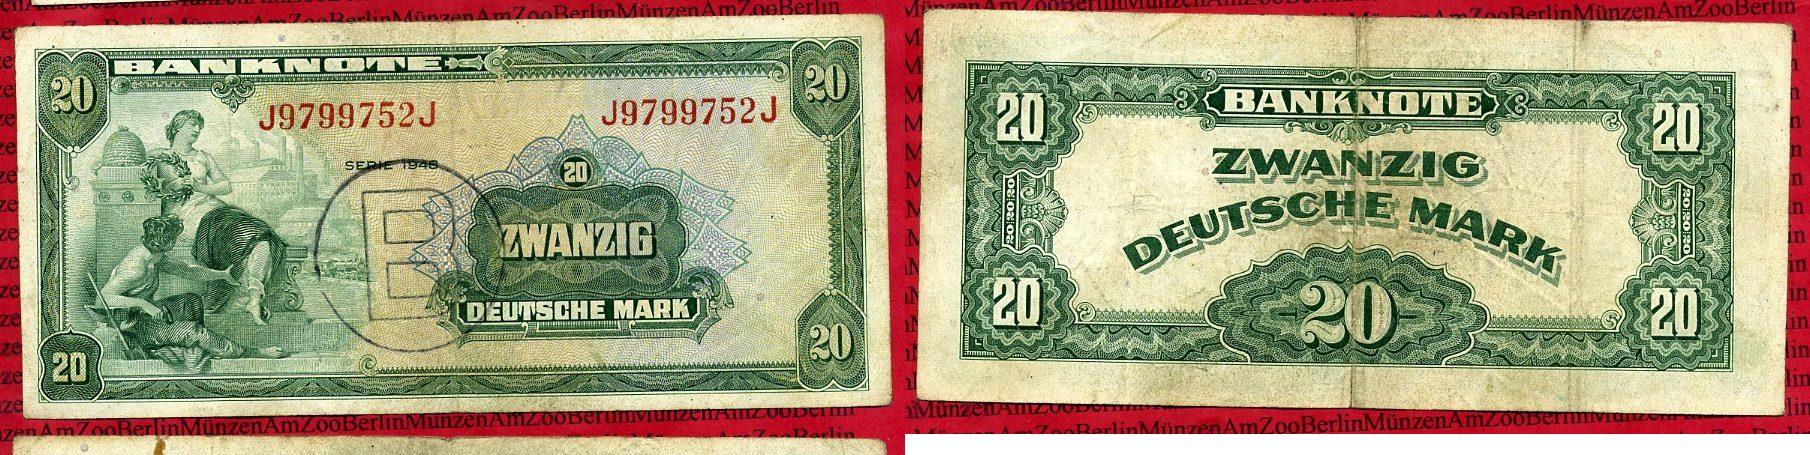 Foto Bundesrepublik Deutschland berlin 20 Dm Deutsche Mark Kopfgeld 1948